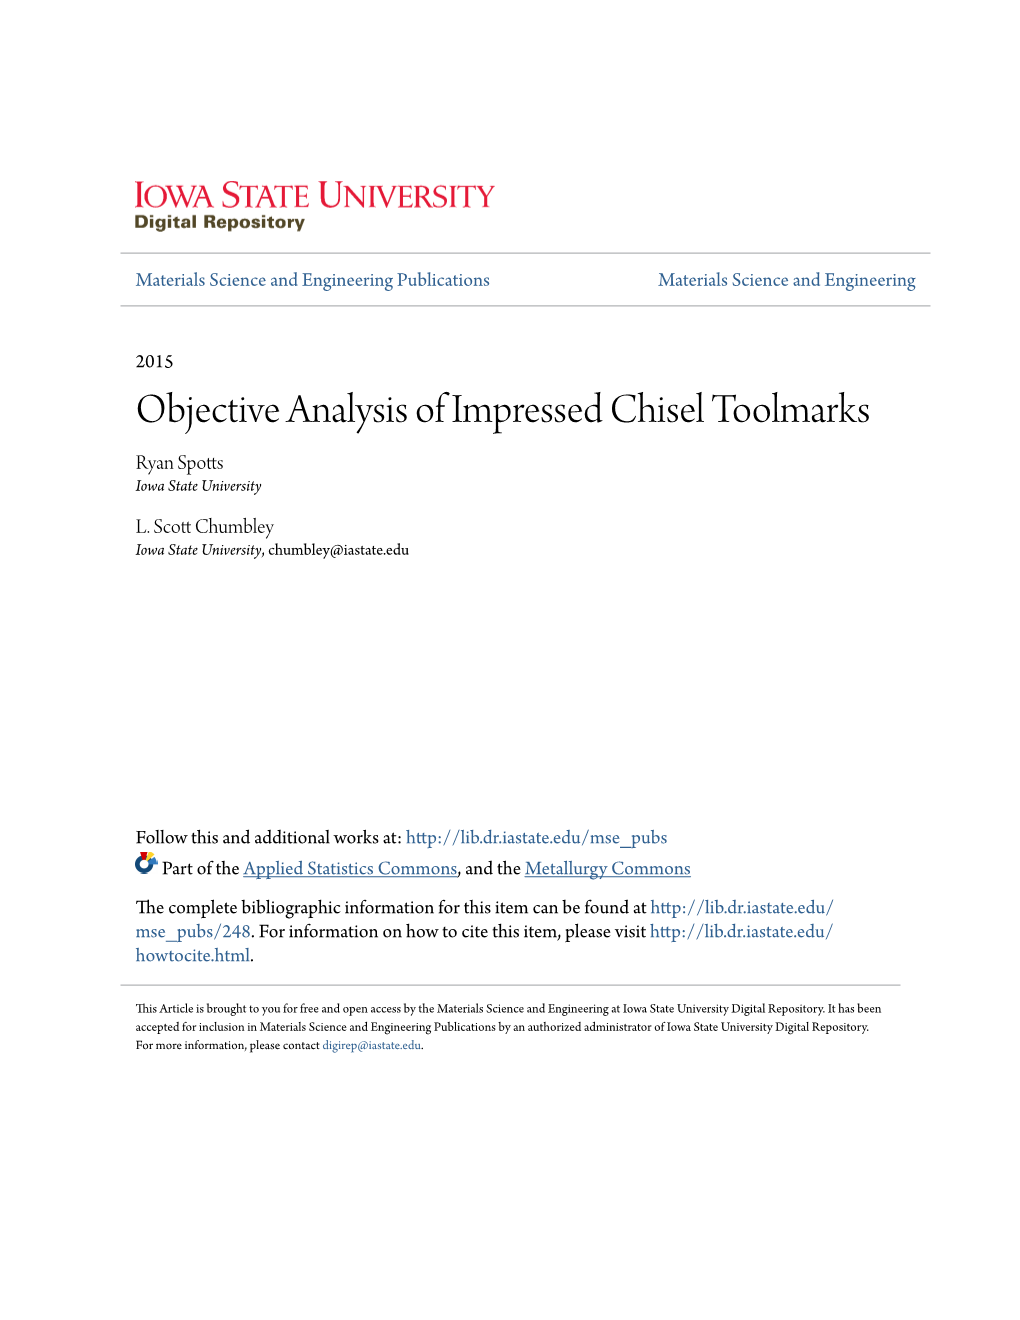 Objective Analysis of Impressed Chisel Toolmarks Ryan Spotts Iowa State University